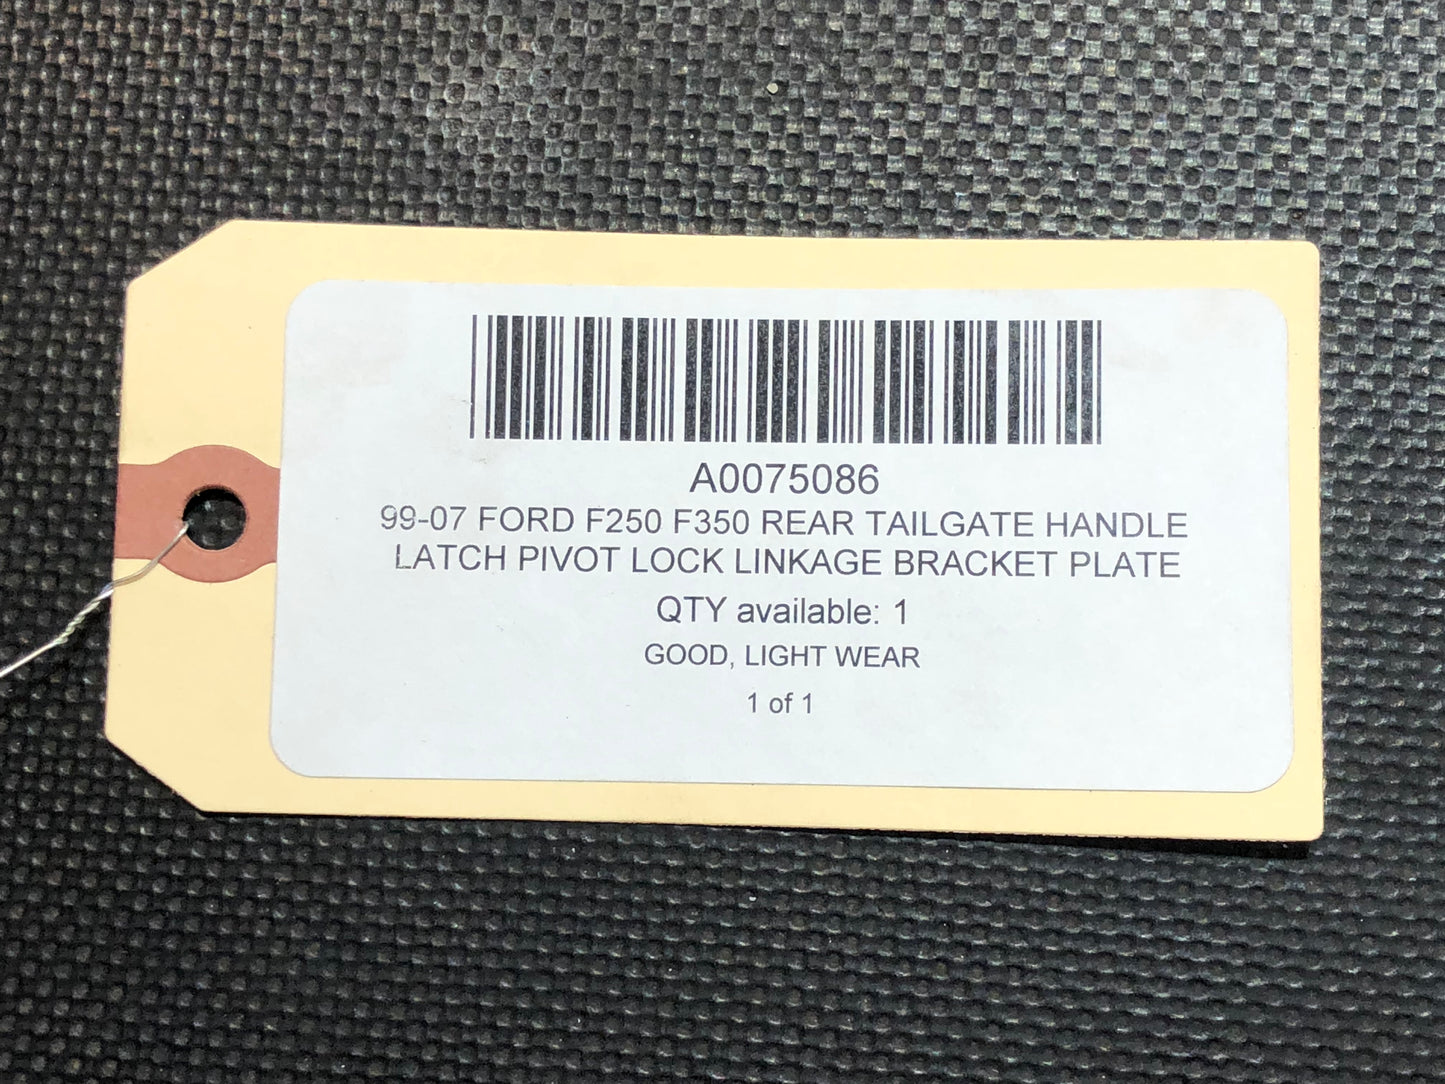 99-07 Ford F250 F350 Rear Tailgate Handle Latch Pivot Lock Linkage Bracket Plate